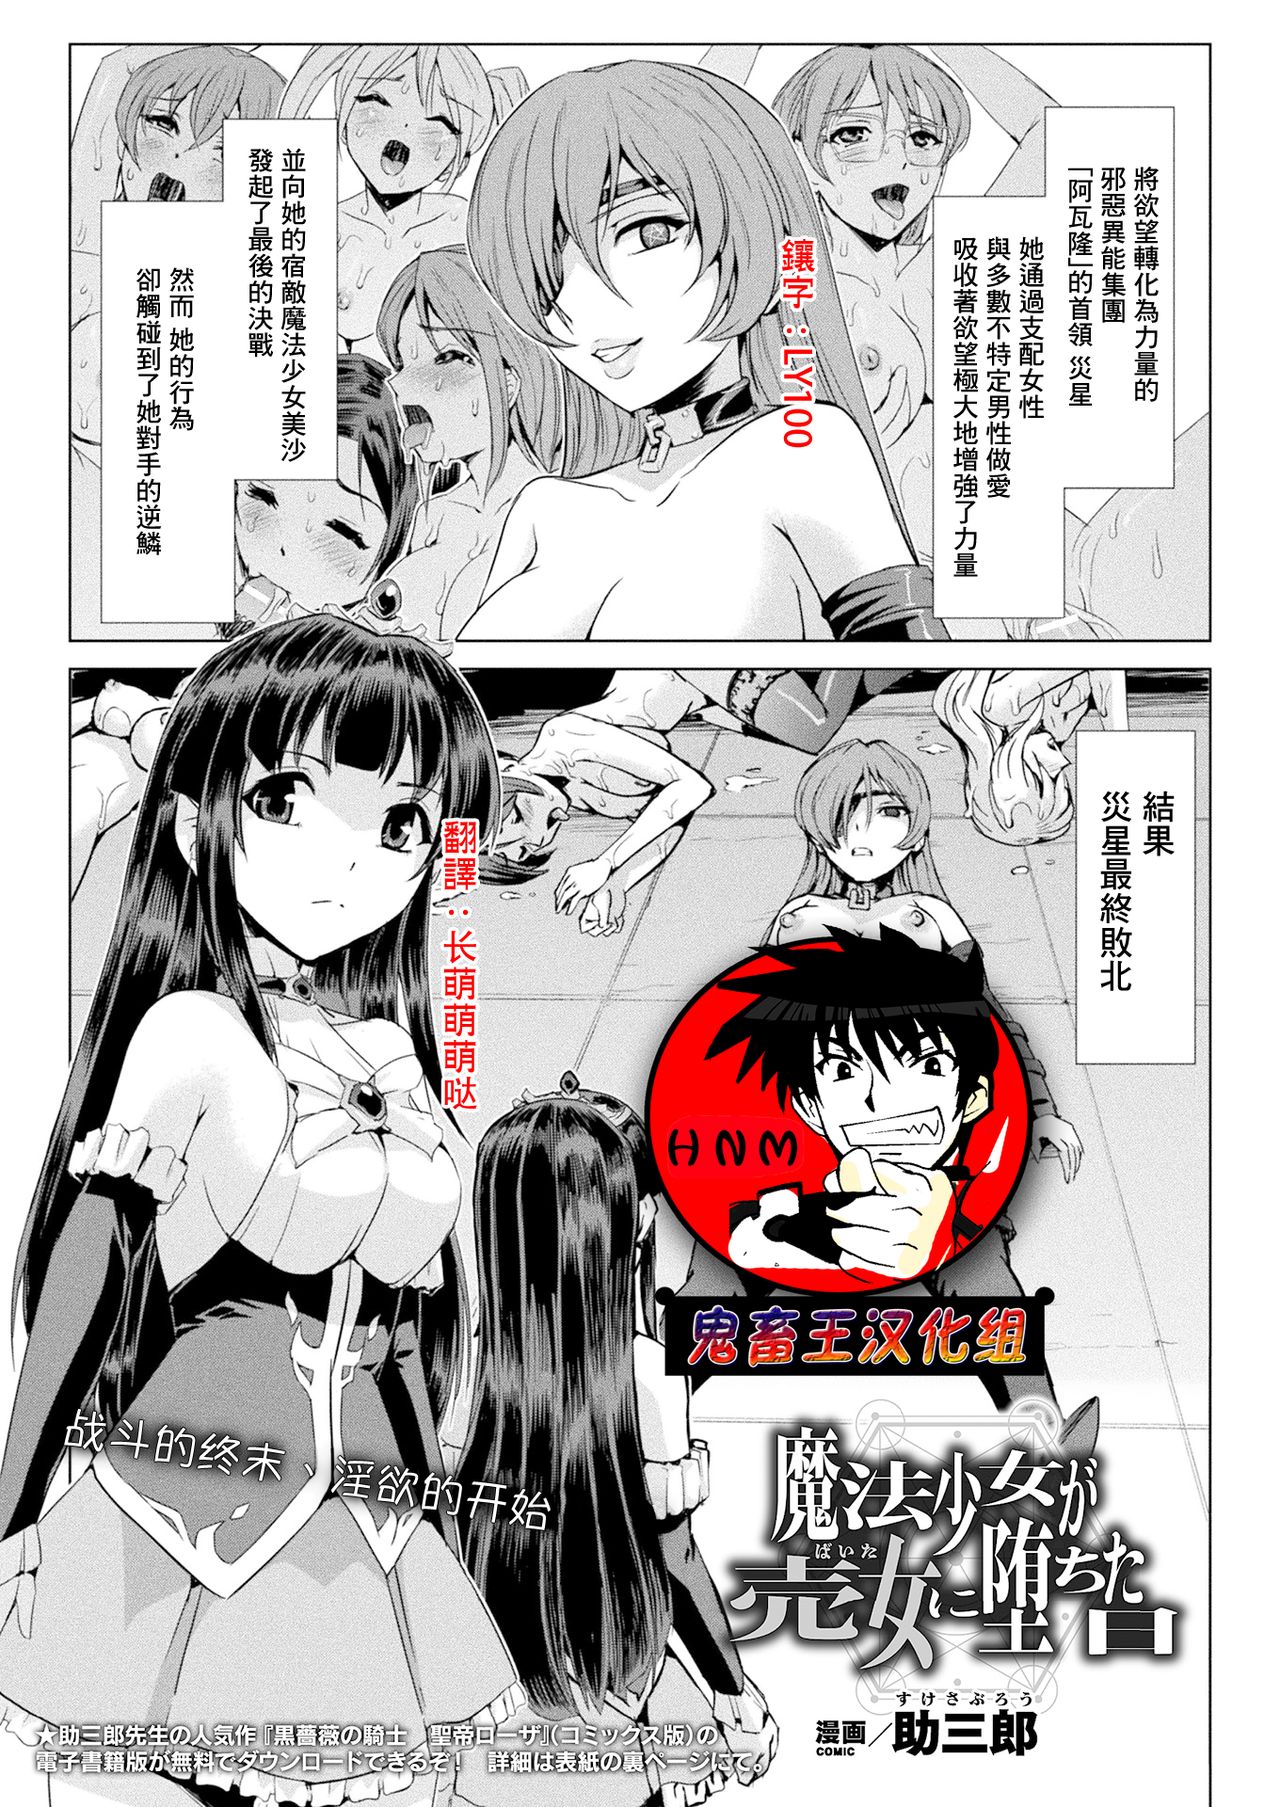 Read mmf threesome Porn comics Â» Page 48 of 1182 Â» Hentai porns - Manga and  porncomics xxx 48 hentai comics